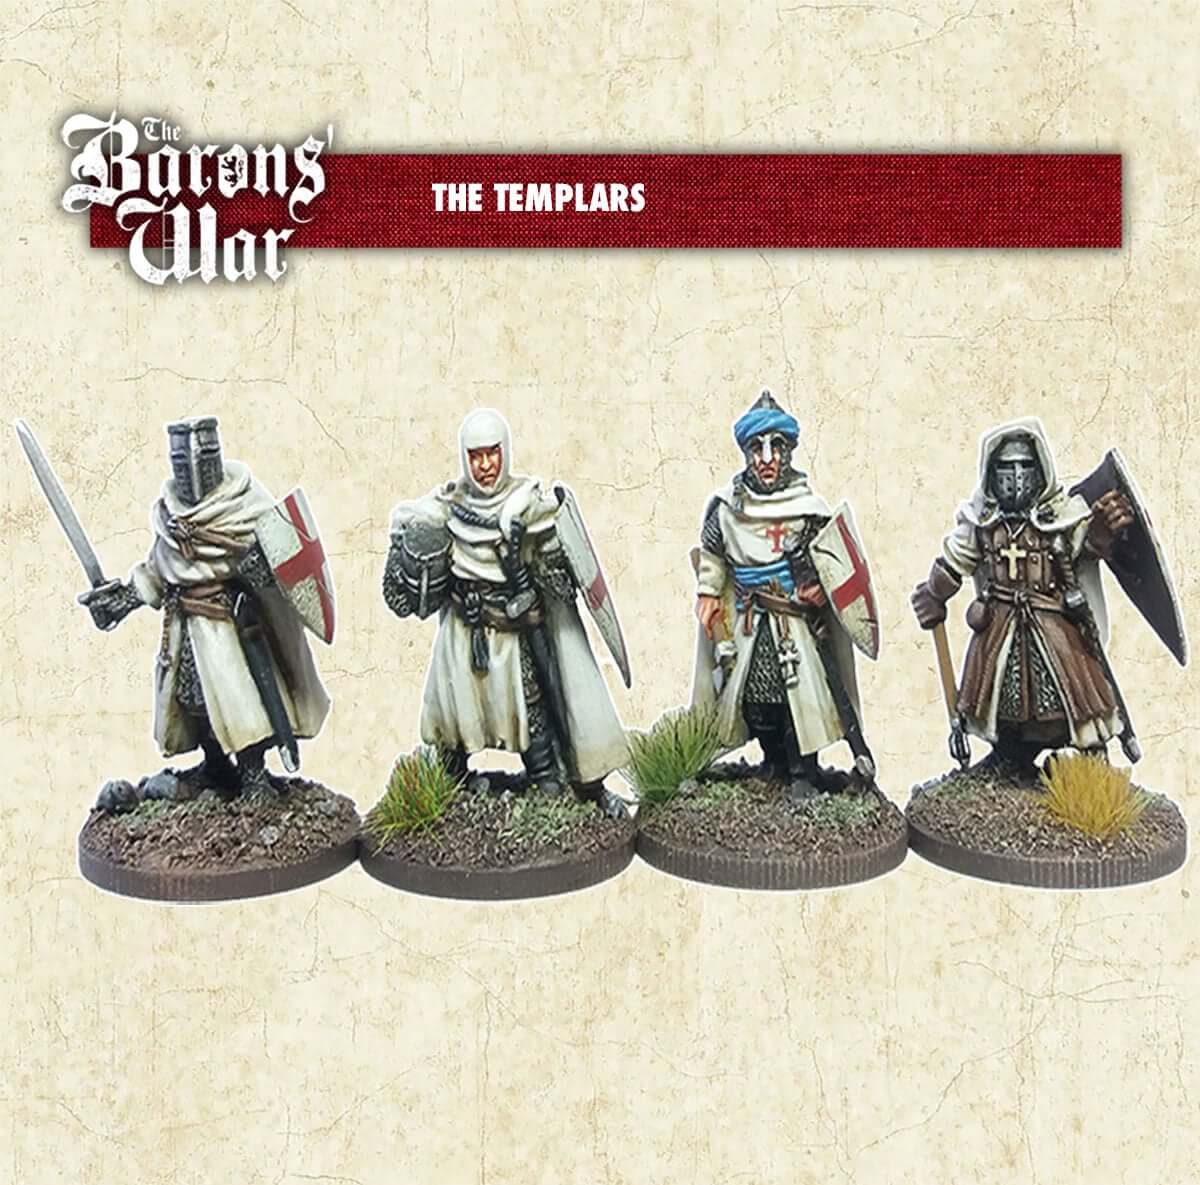 Baron's War The Templars